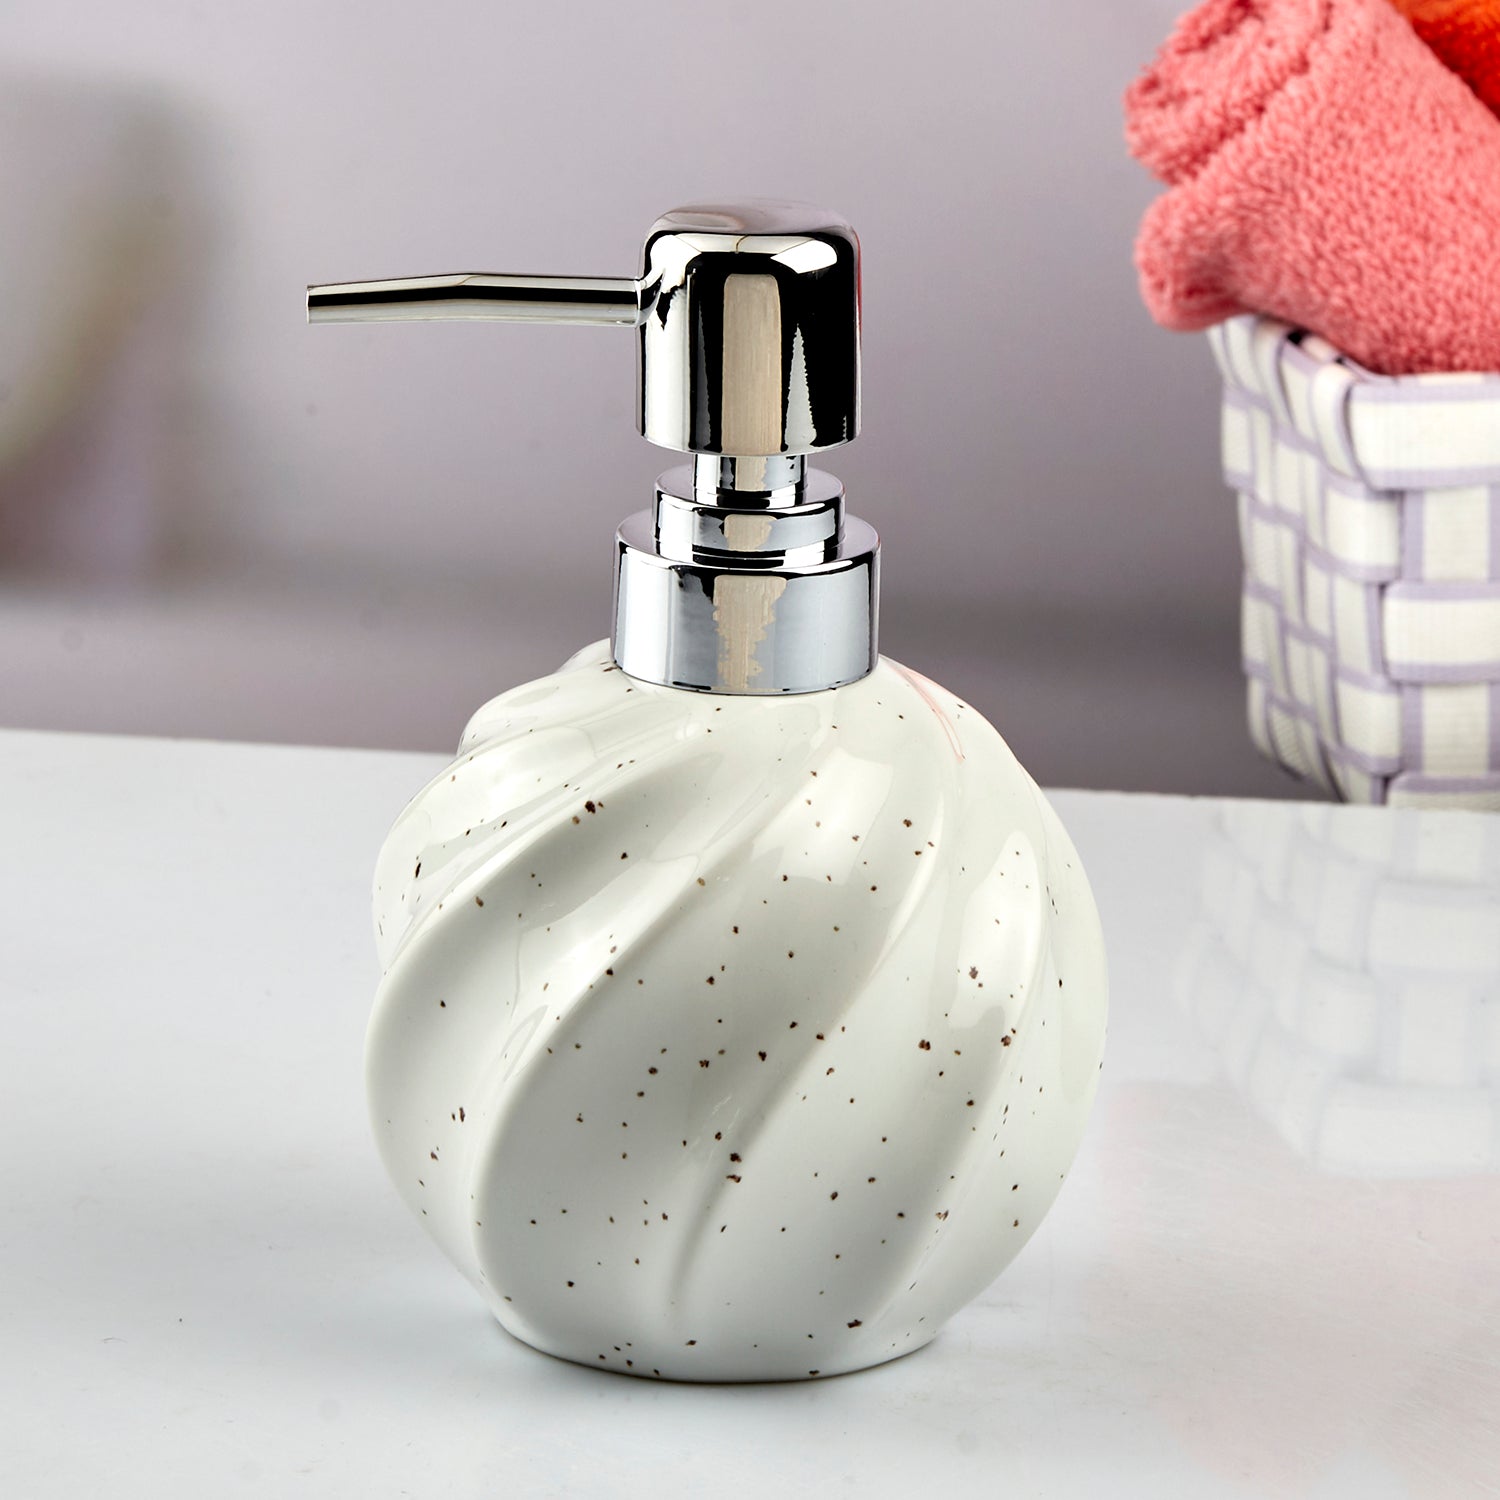 Ceramic Soap Dispenser handwash Pump for Bathroom, Set of 1, White (10741)